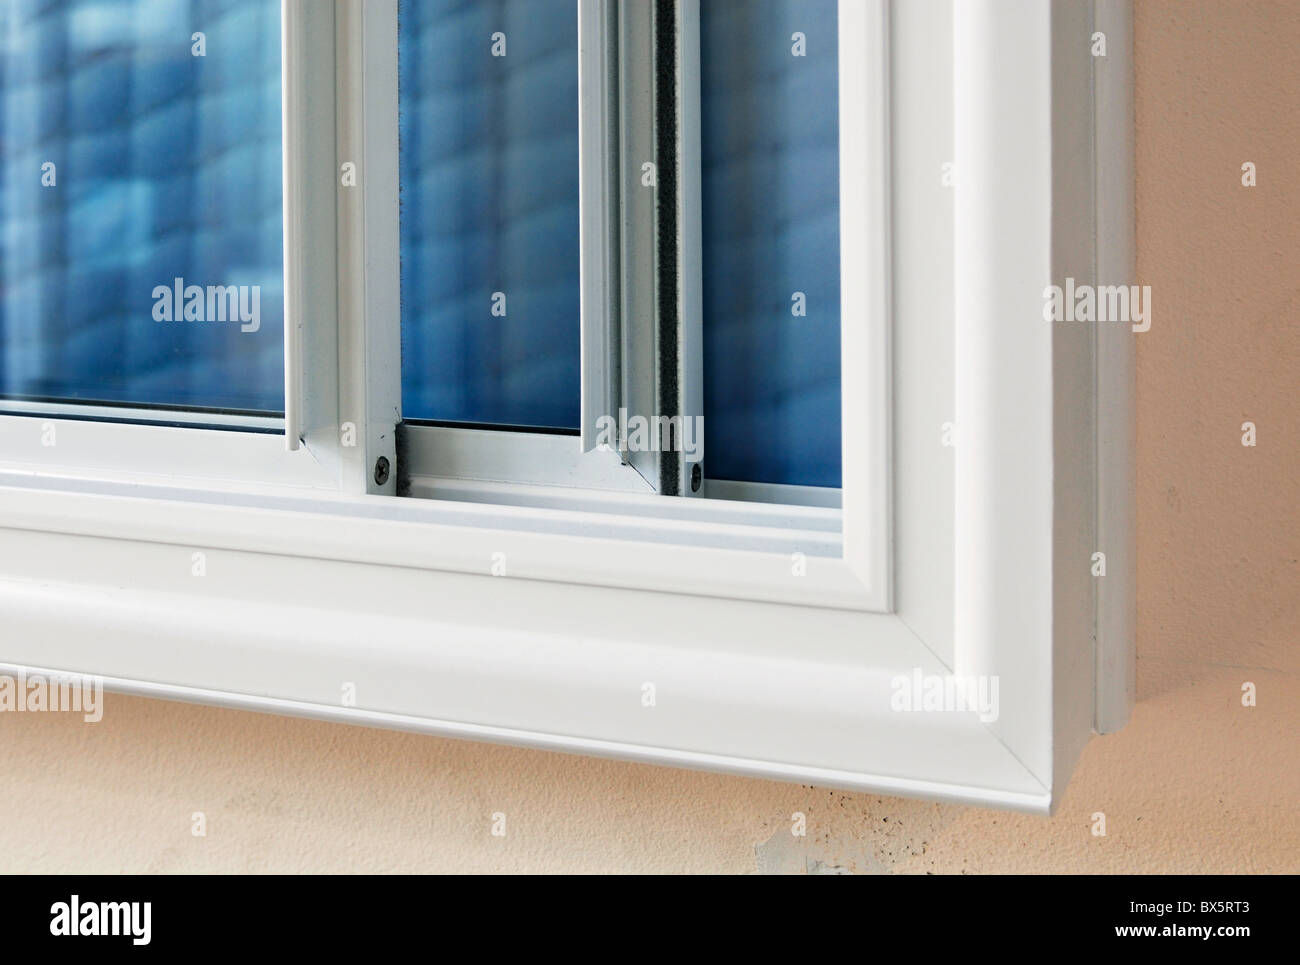 Secondary glazing on window insulates heat and noise Stock Photo